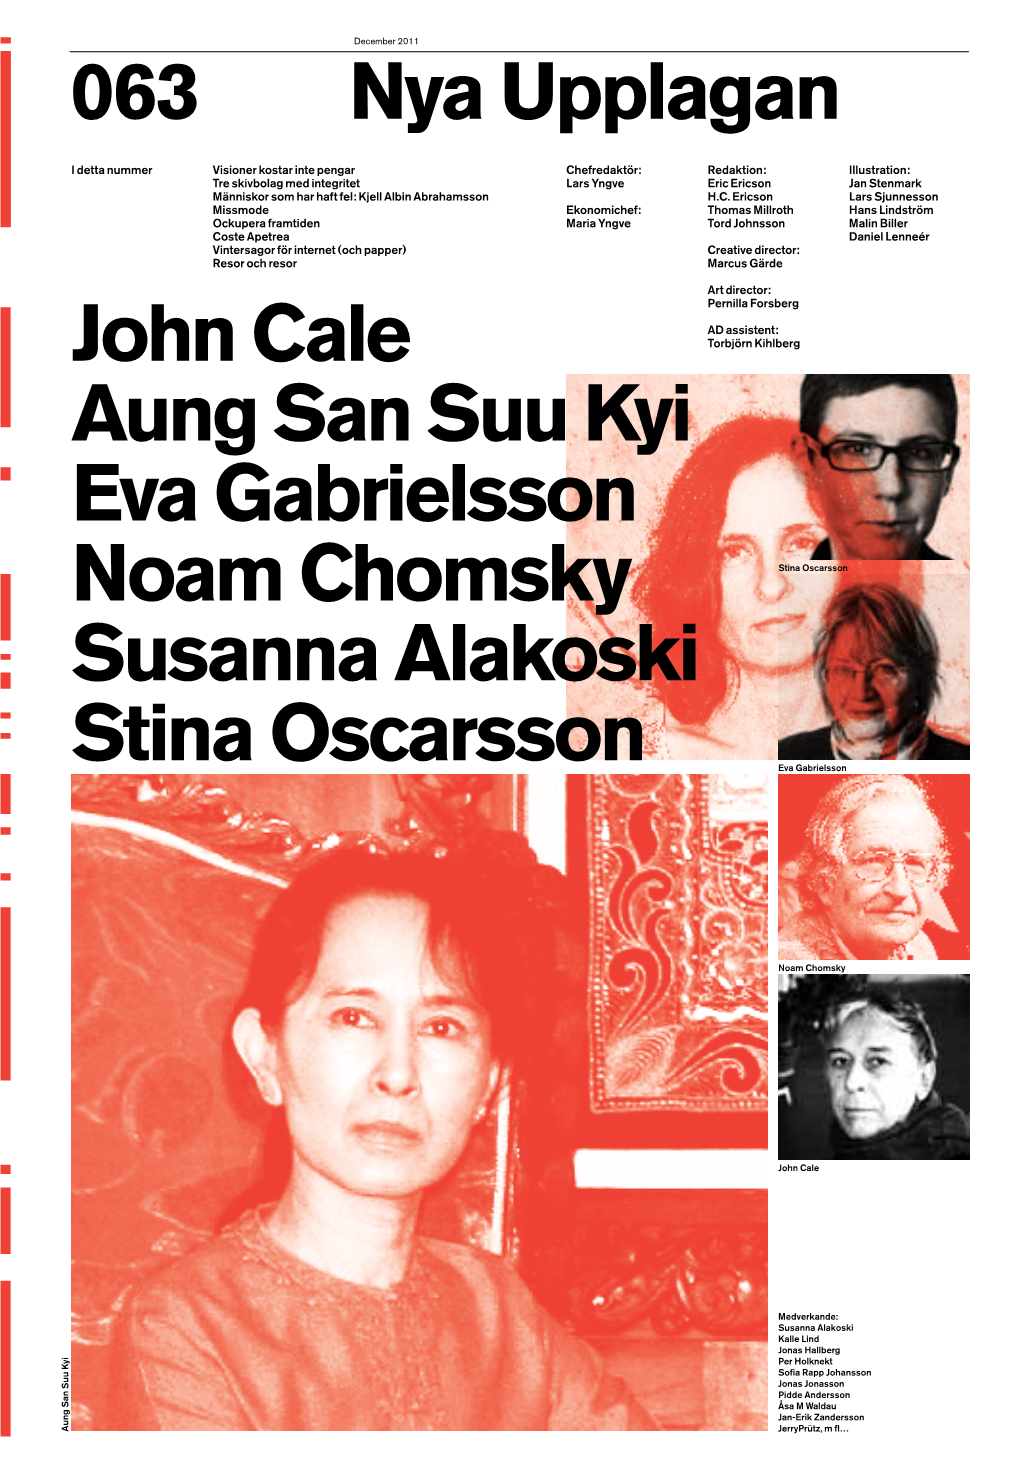 John Cale Torbjörn Kihlberg Aung San Suu Kyi Eva Gabrielsson Noam Chomsky Stina Oscarsson Susanna Alakoski